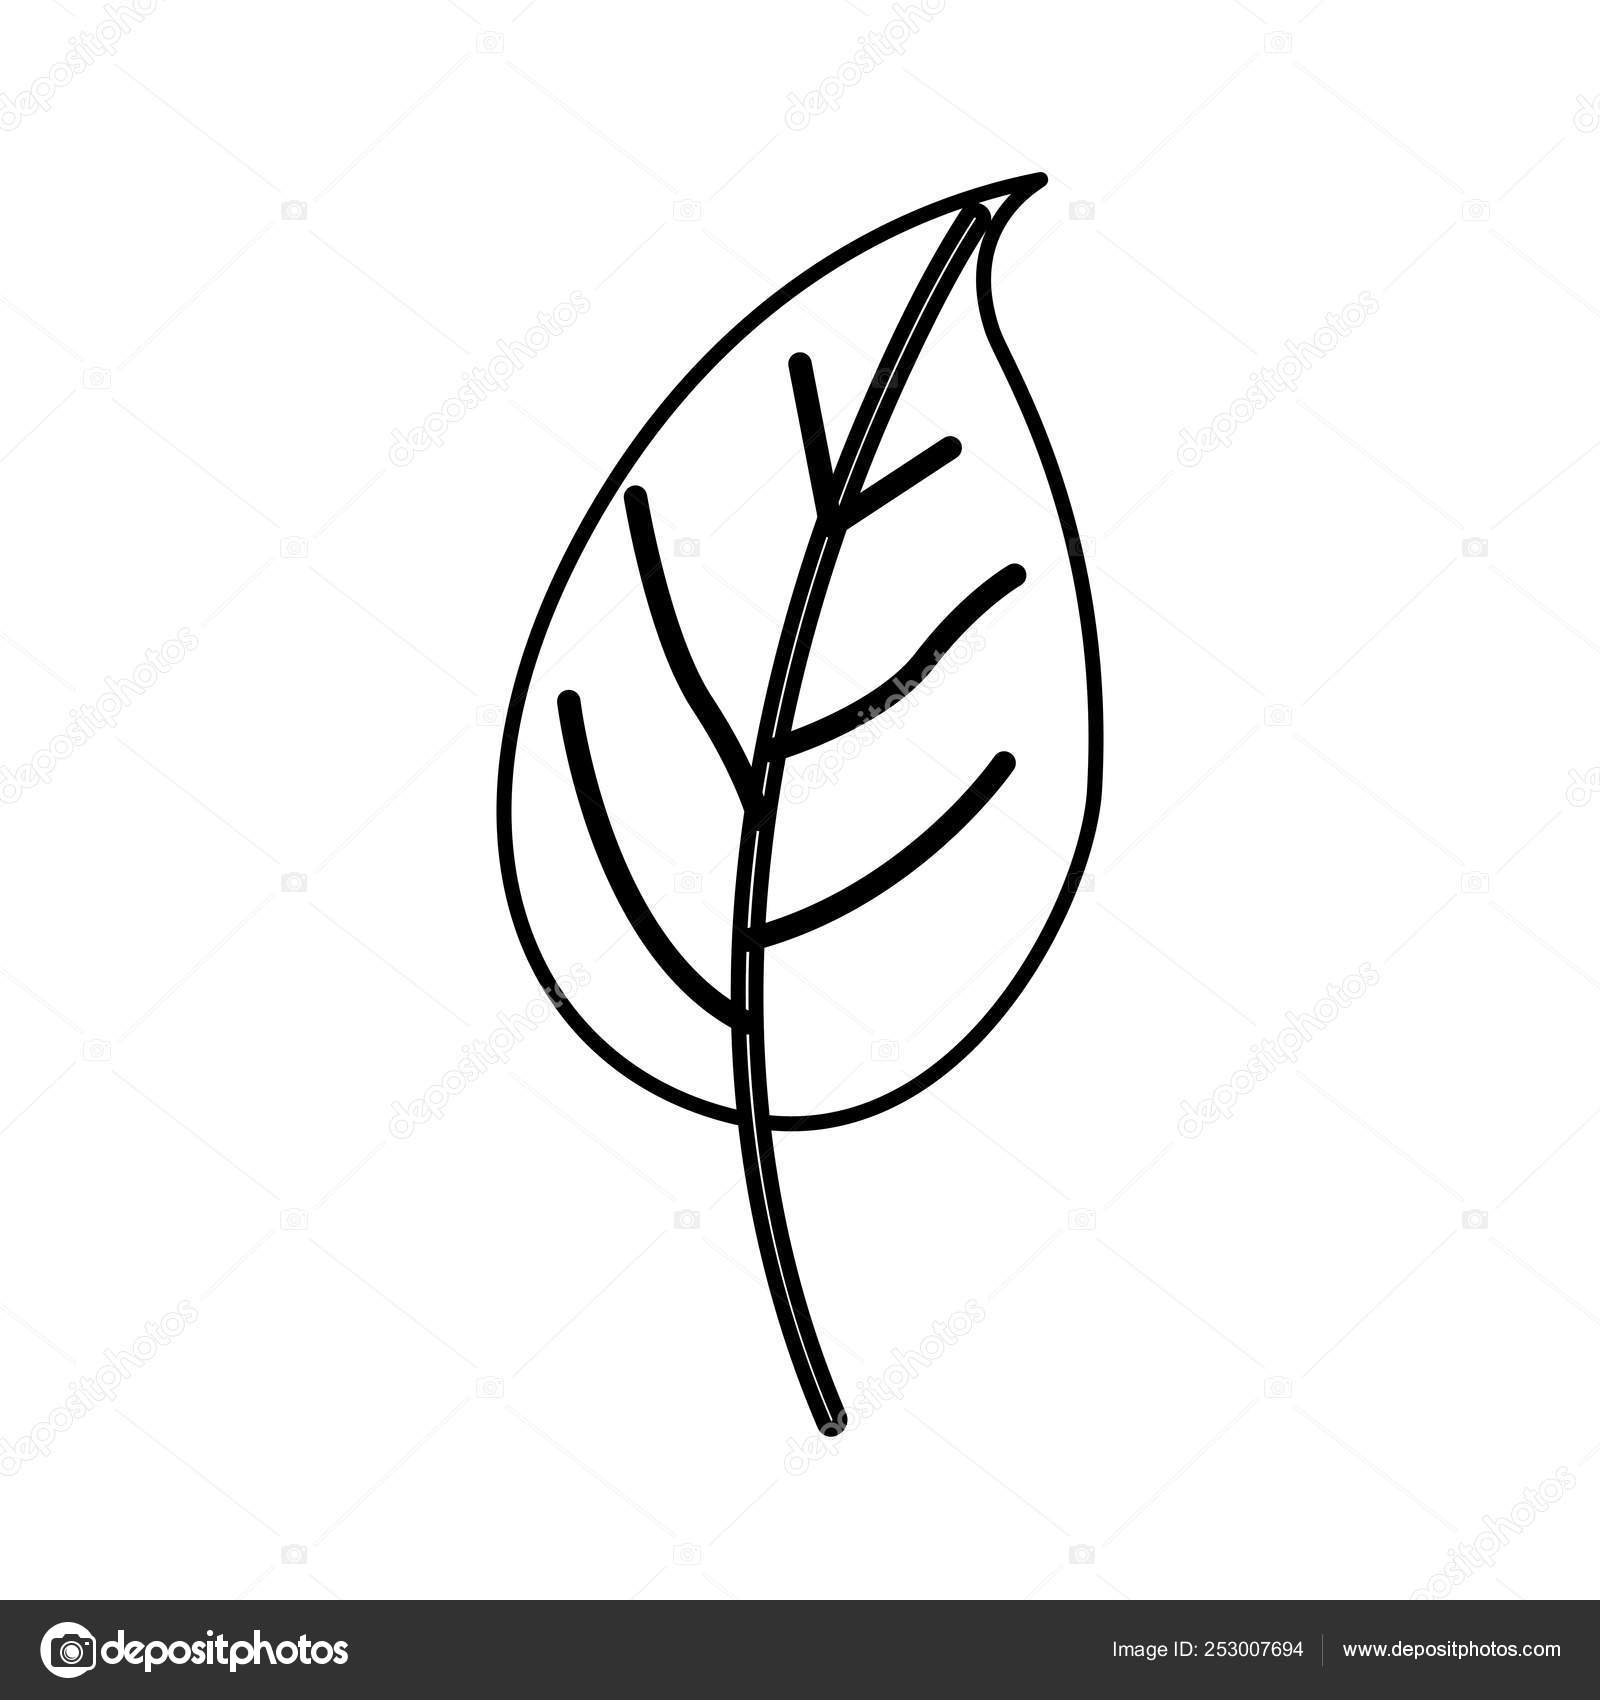 depositphotos 253007694 stock illustration sketch contour of simple leaf